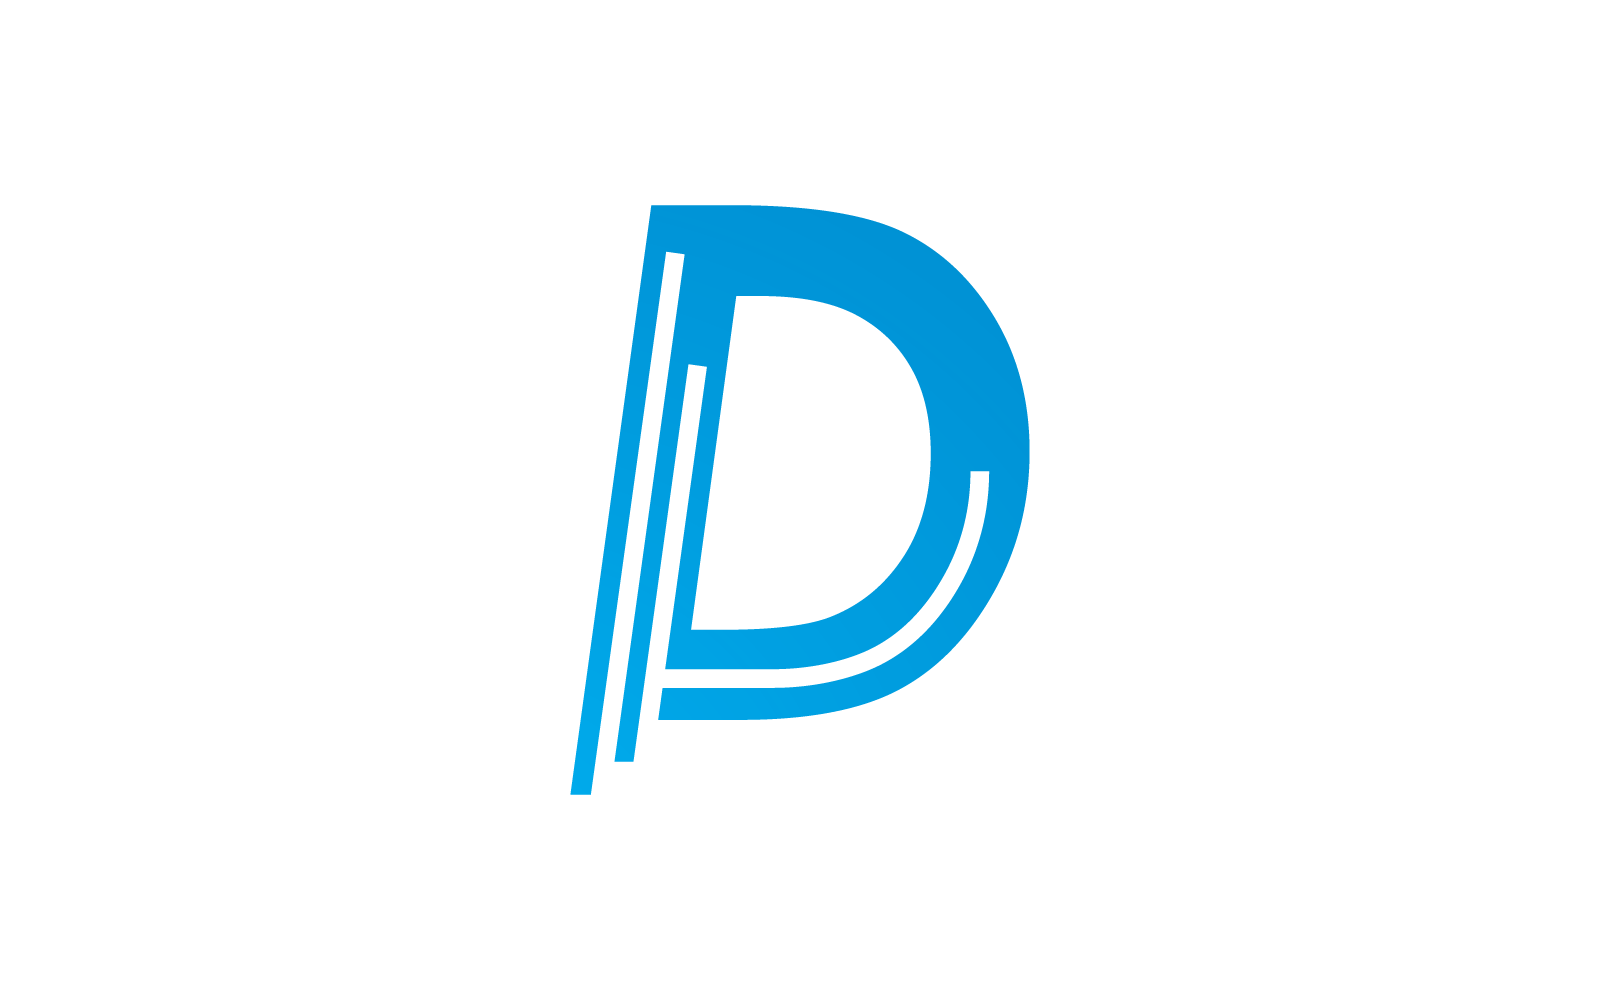 D Initial letter alphabet font logo vector design